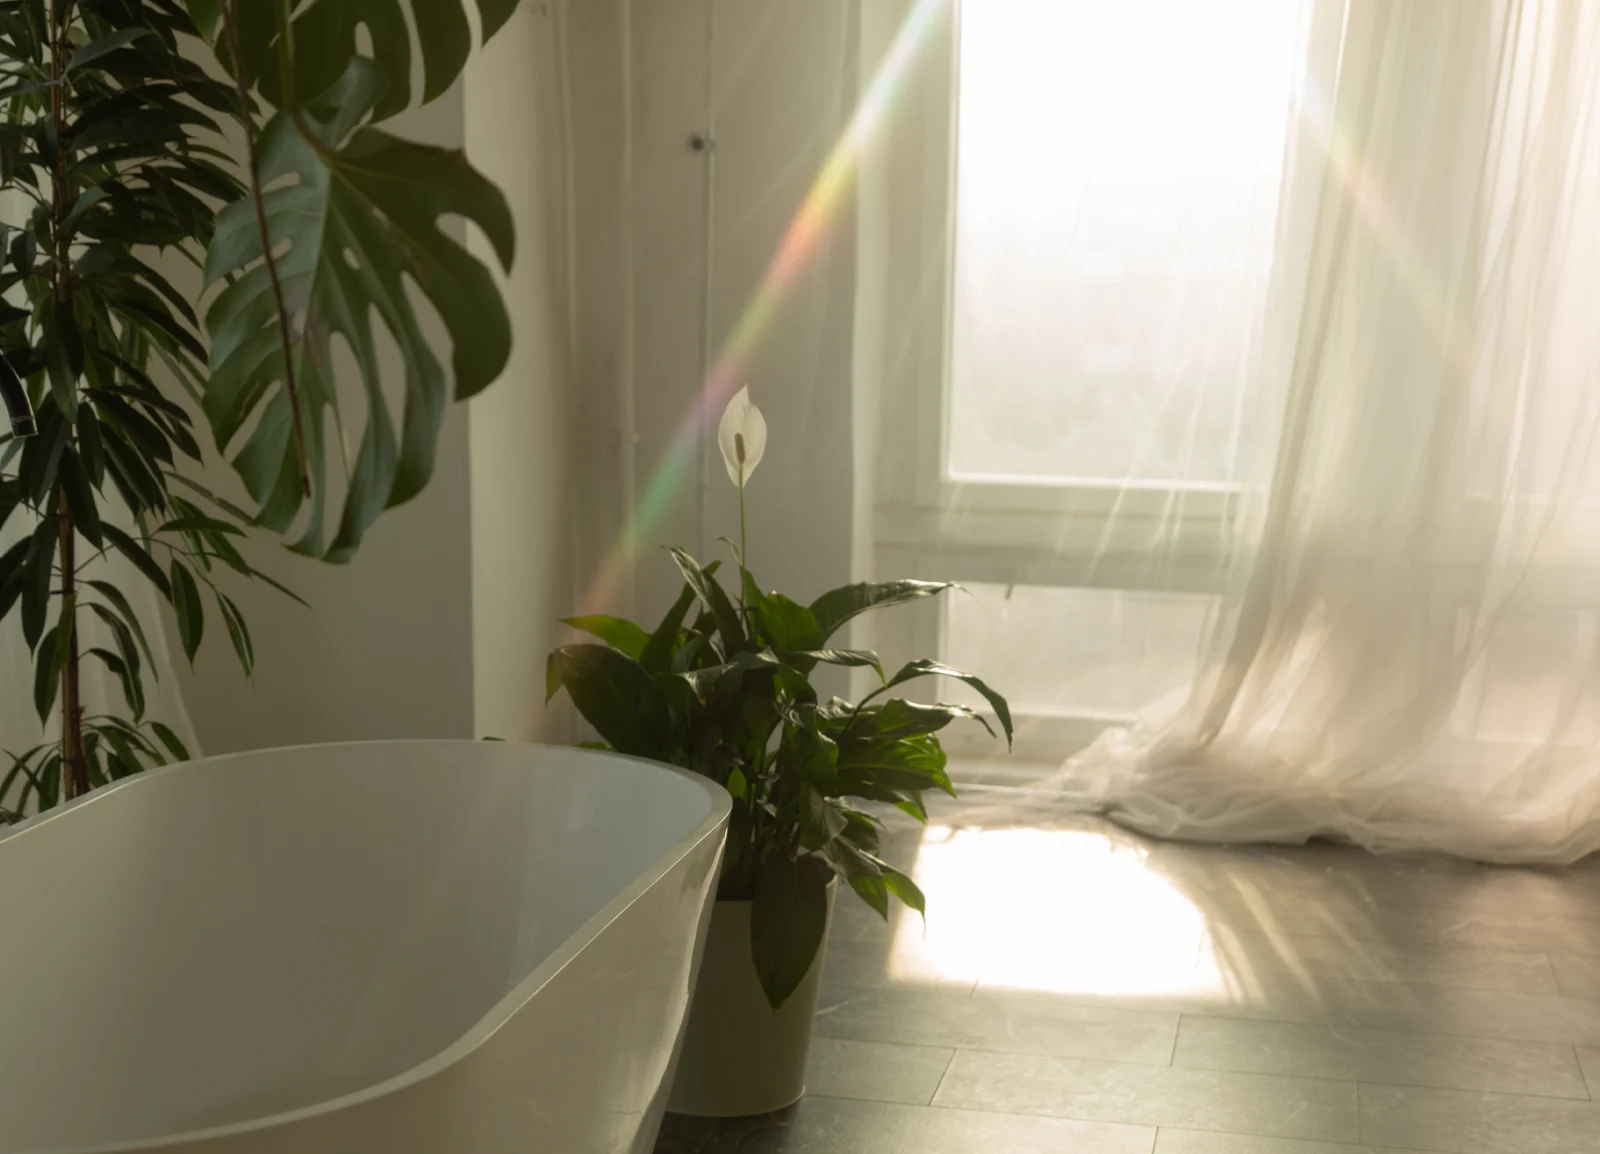 Sunlight streams through a window into a bathroom